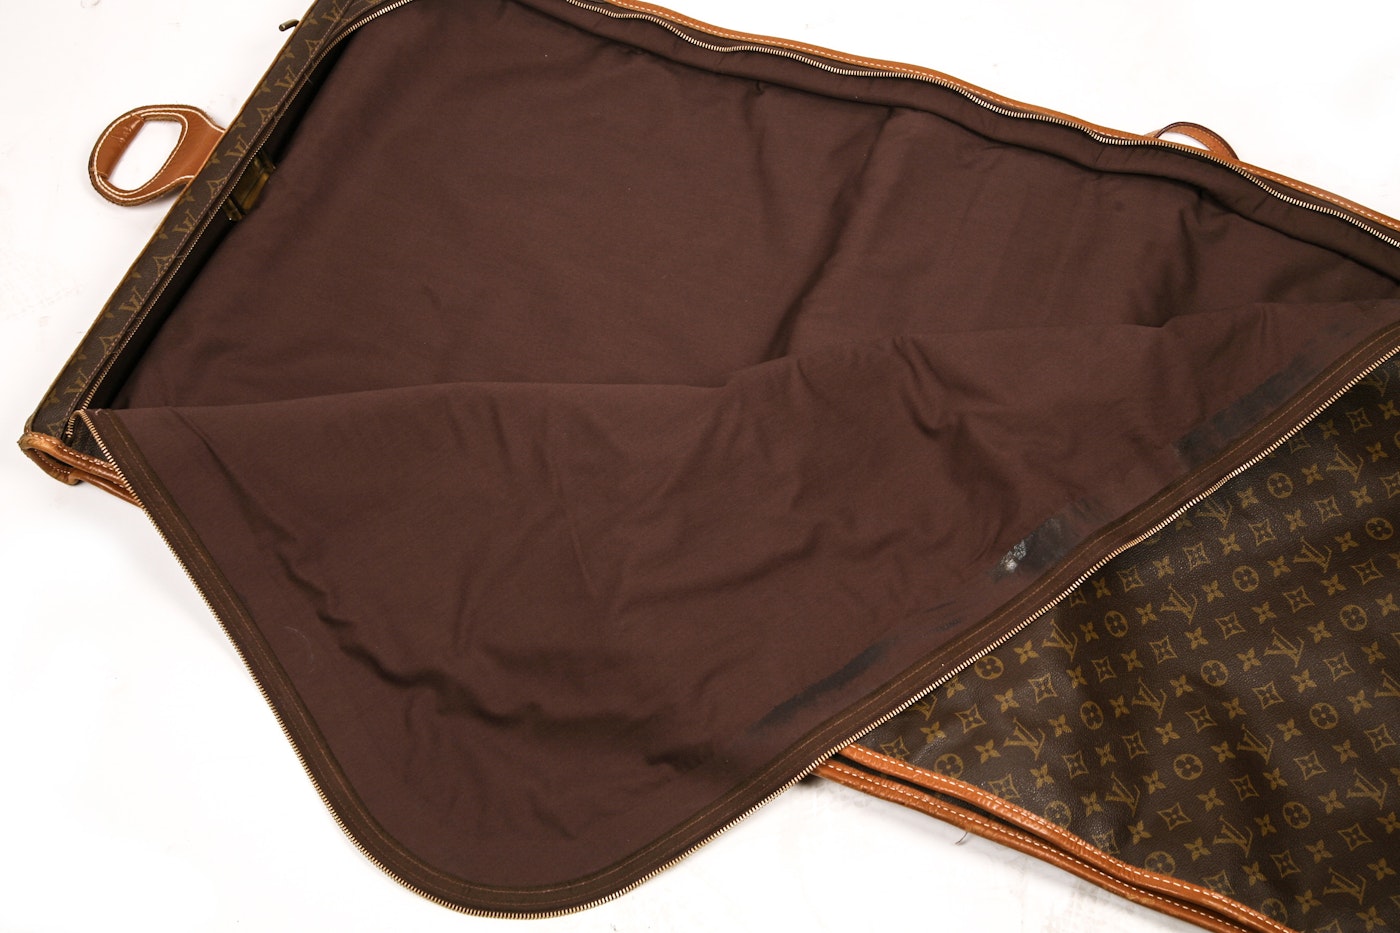 Circa 1970s Vintage Louis Vuitton French Company Garment Bag | EBTH